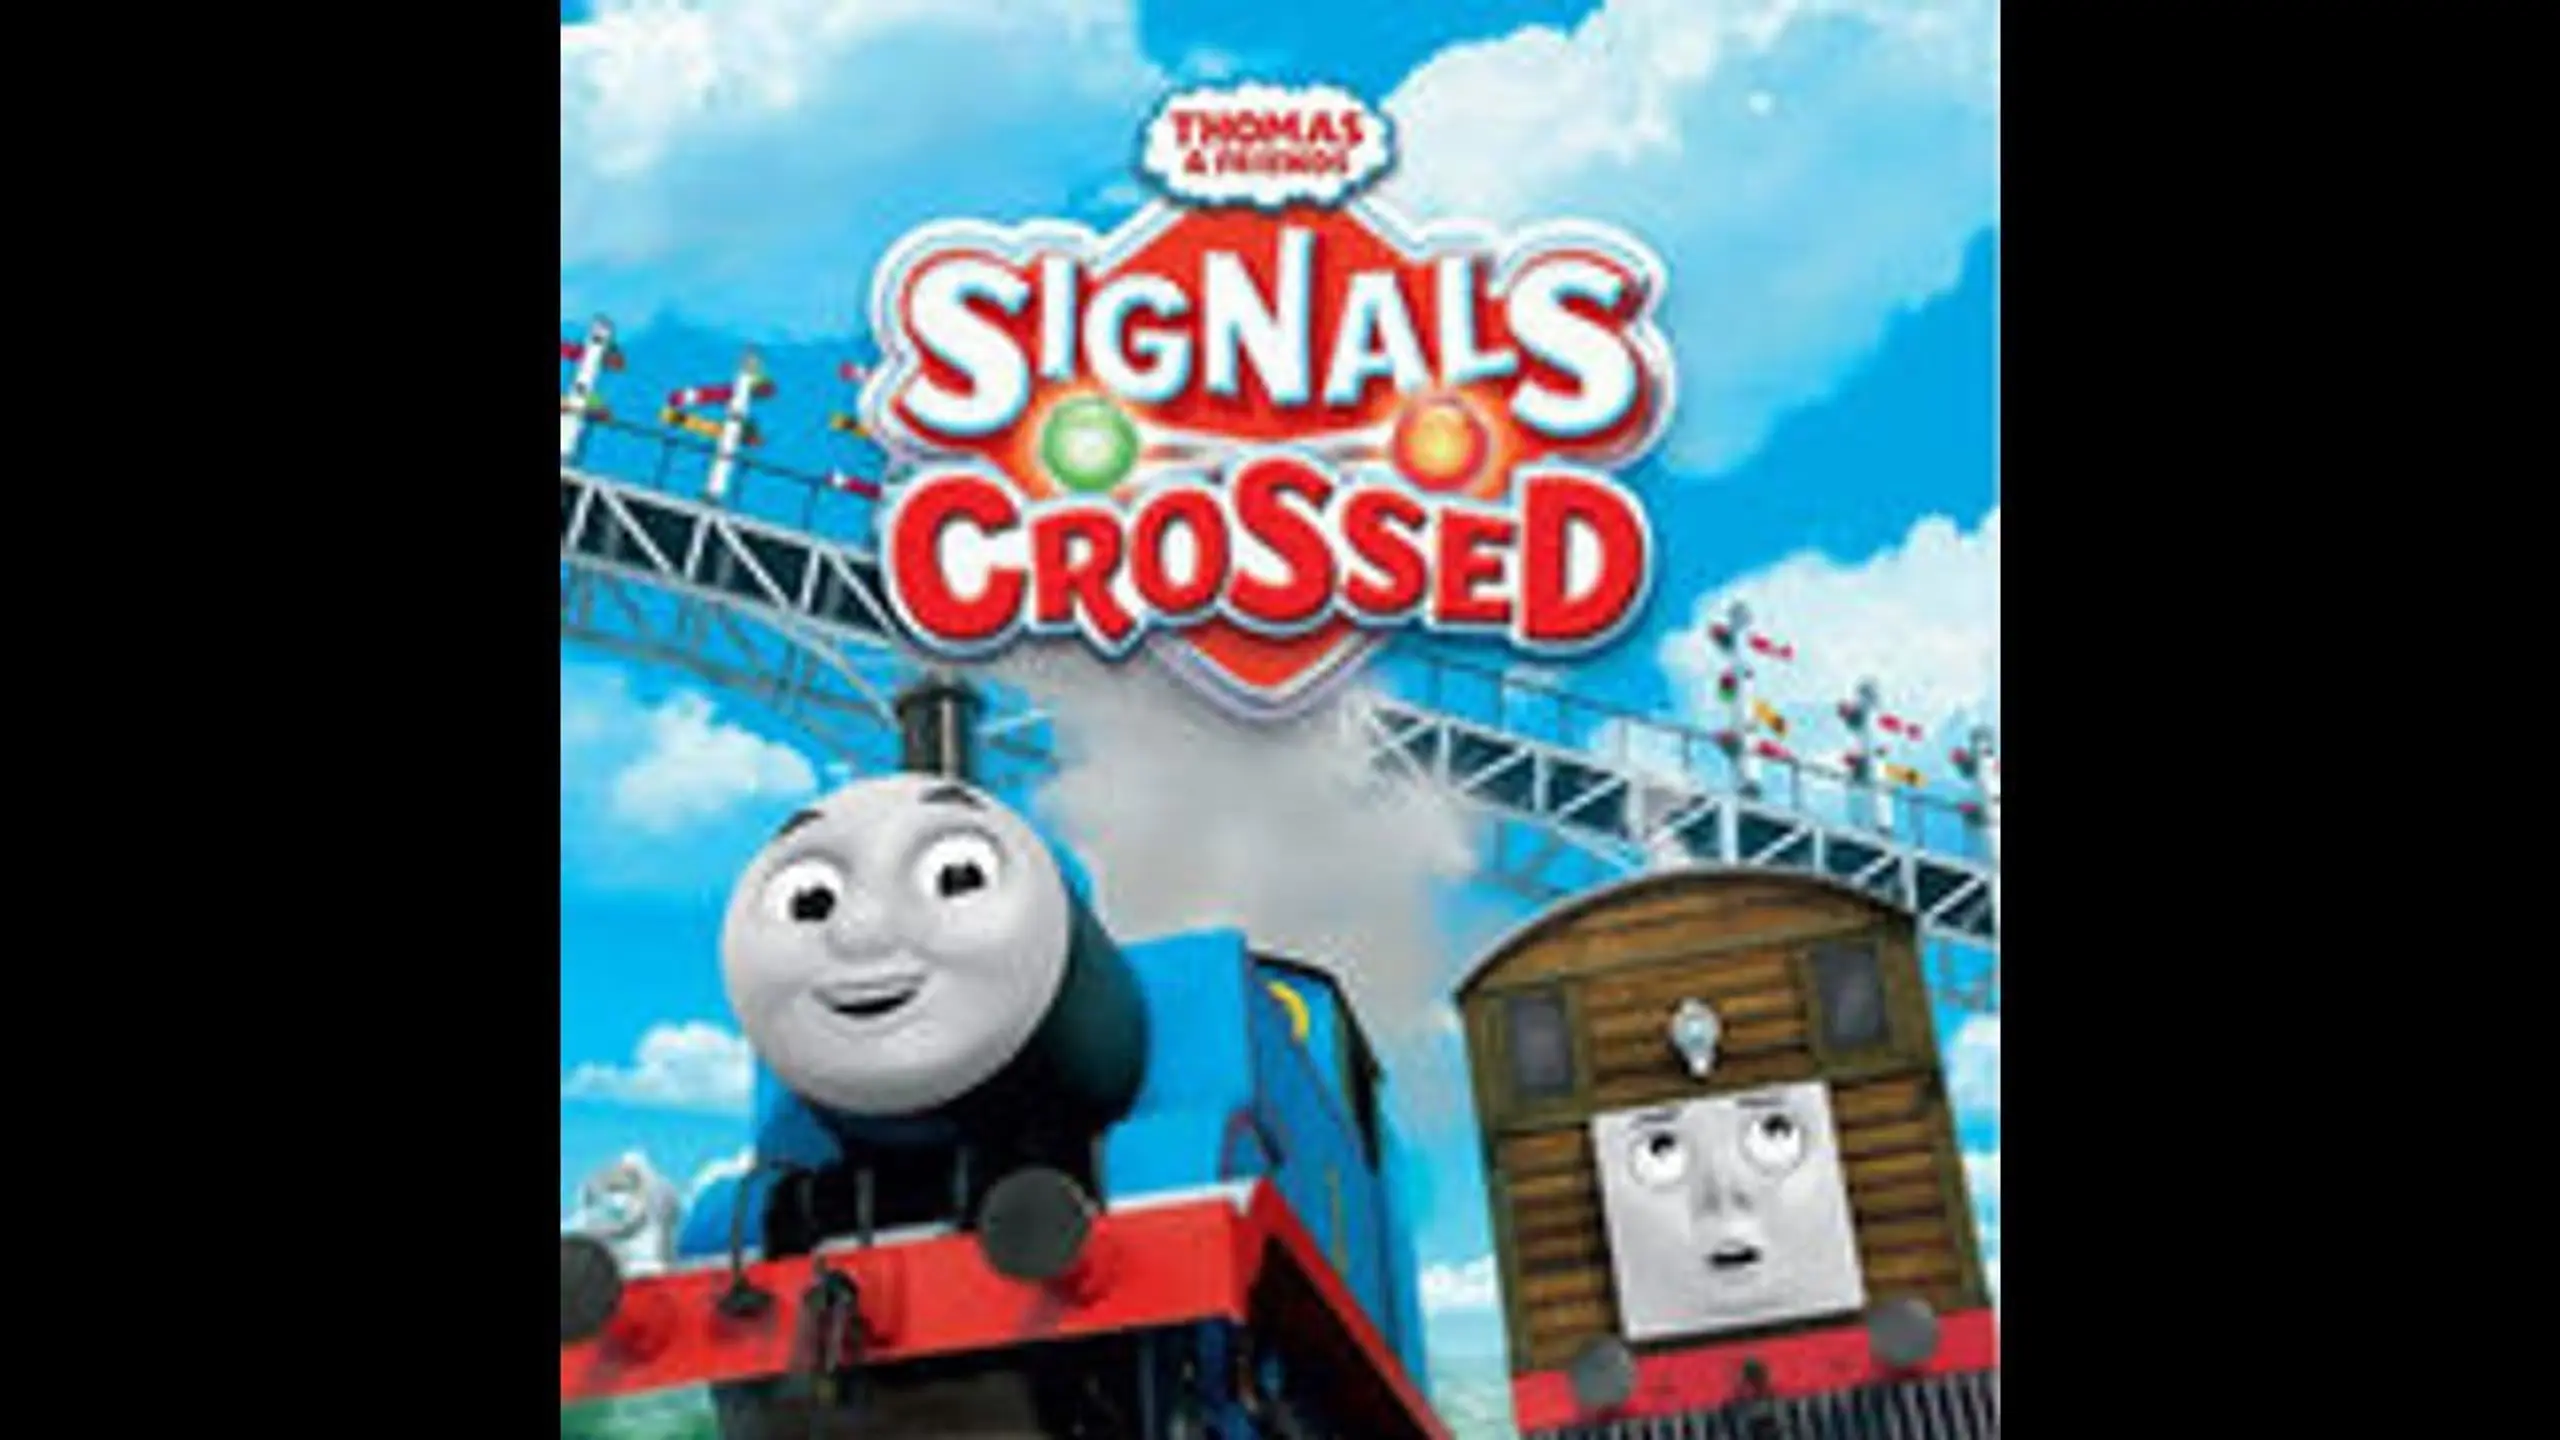 Thomas & Friends: Signals Crossed